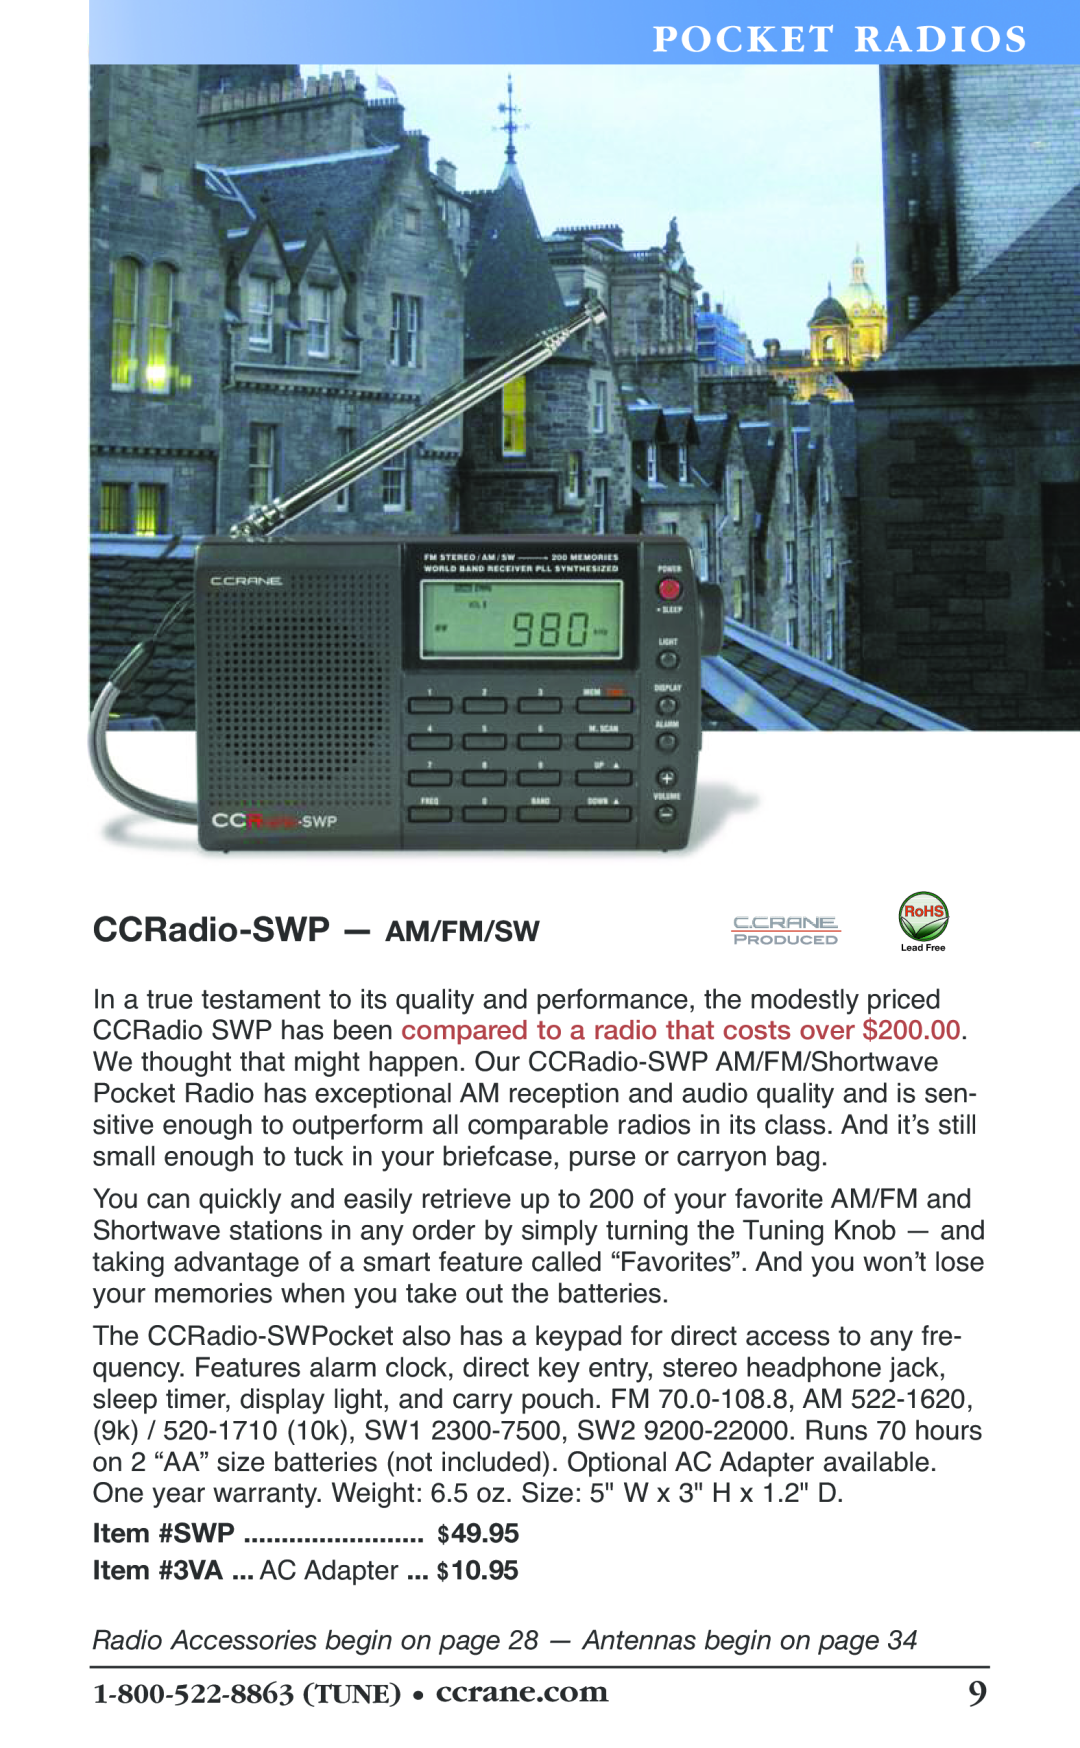 C. Crane 19f manual Po Cket Ra Di Os, CCRadio-SWP— AM/FM/SW, $10.95, $49.95, 1-800-522-8863TUNE • ccrane.com 